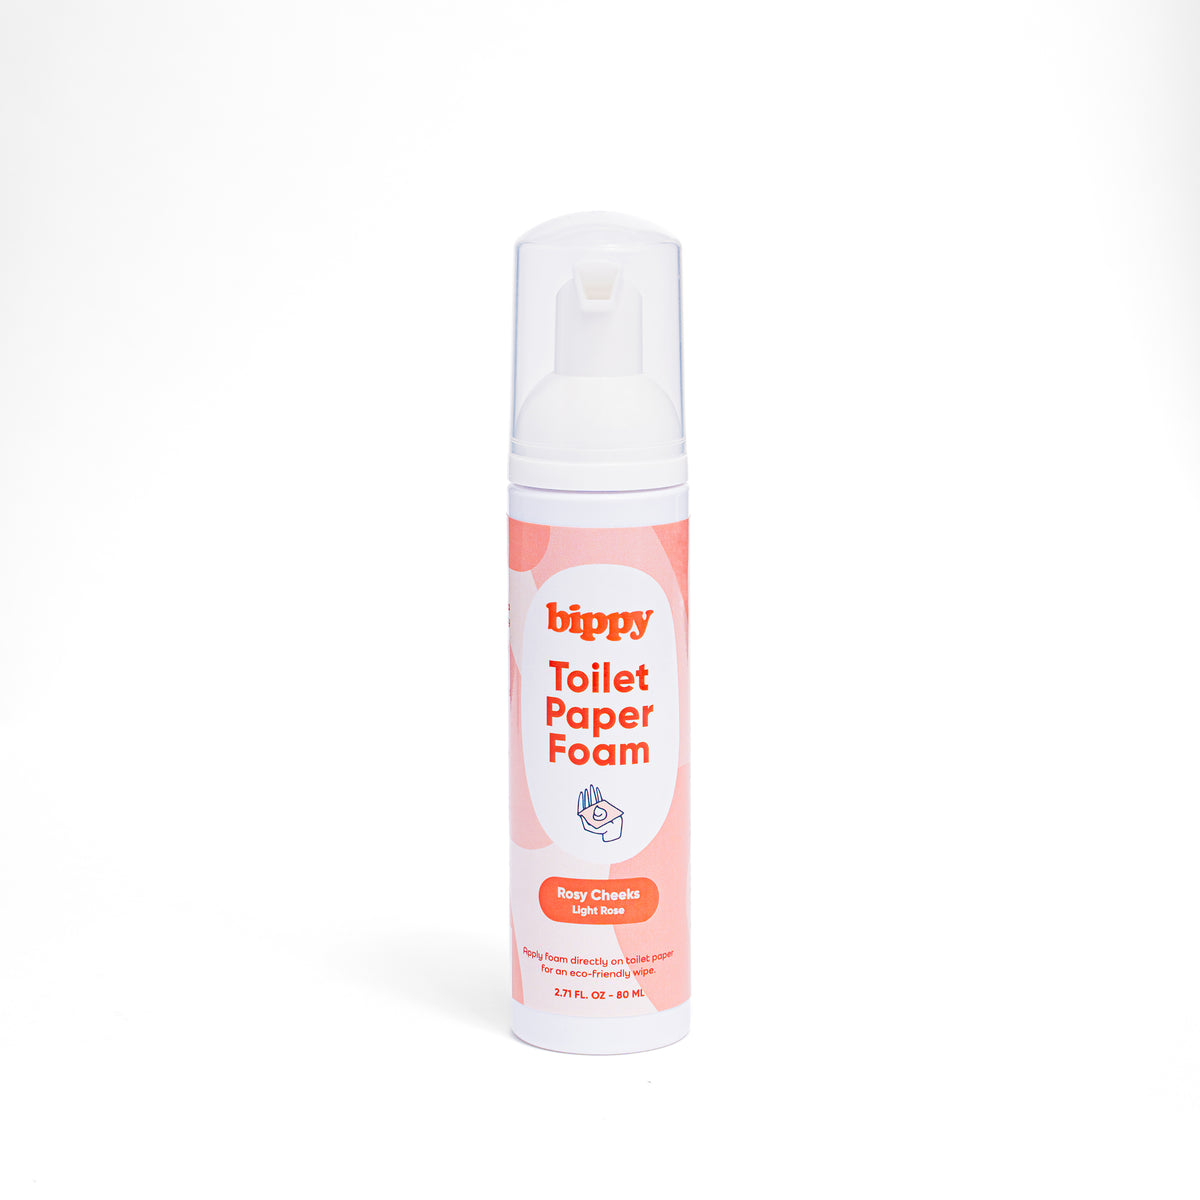 Bippy Toilet Paper Foam - Rosy cheeks scent